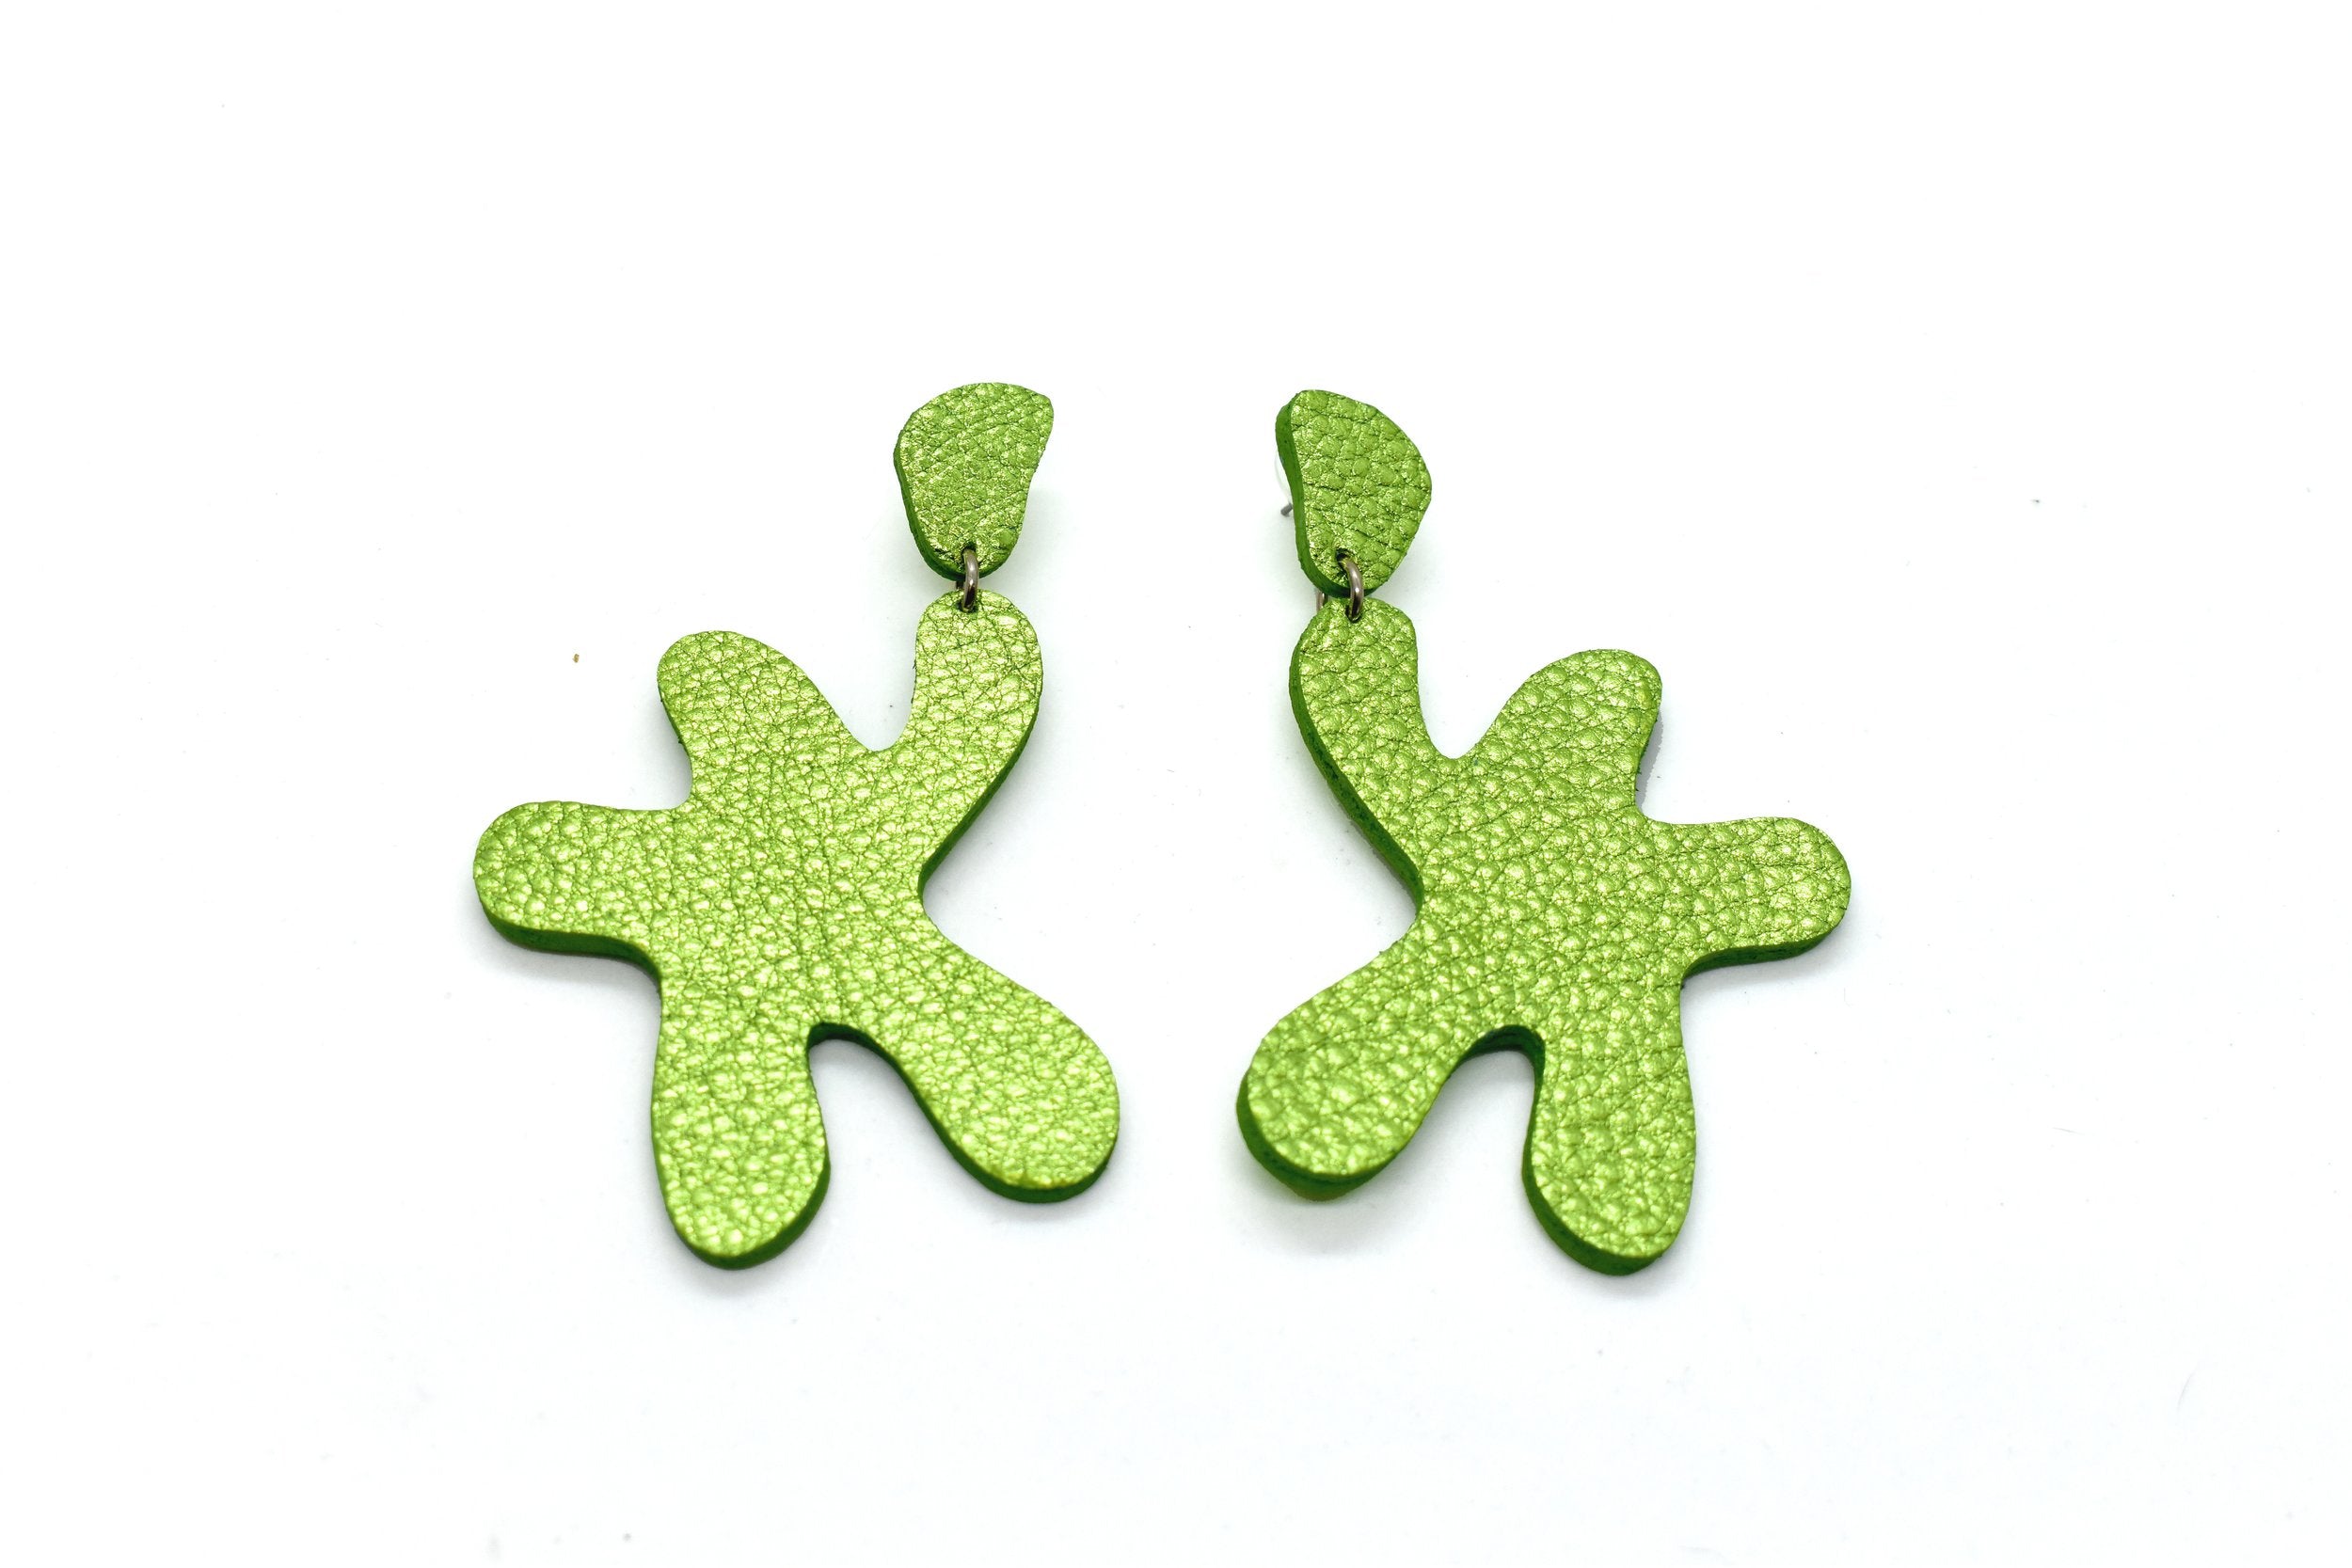 Metallic Lime Leather Statement Earrings, Matisse Style Earrings in Lime Green